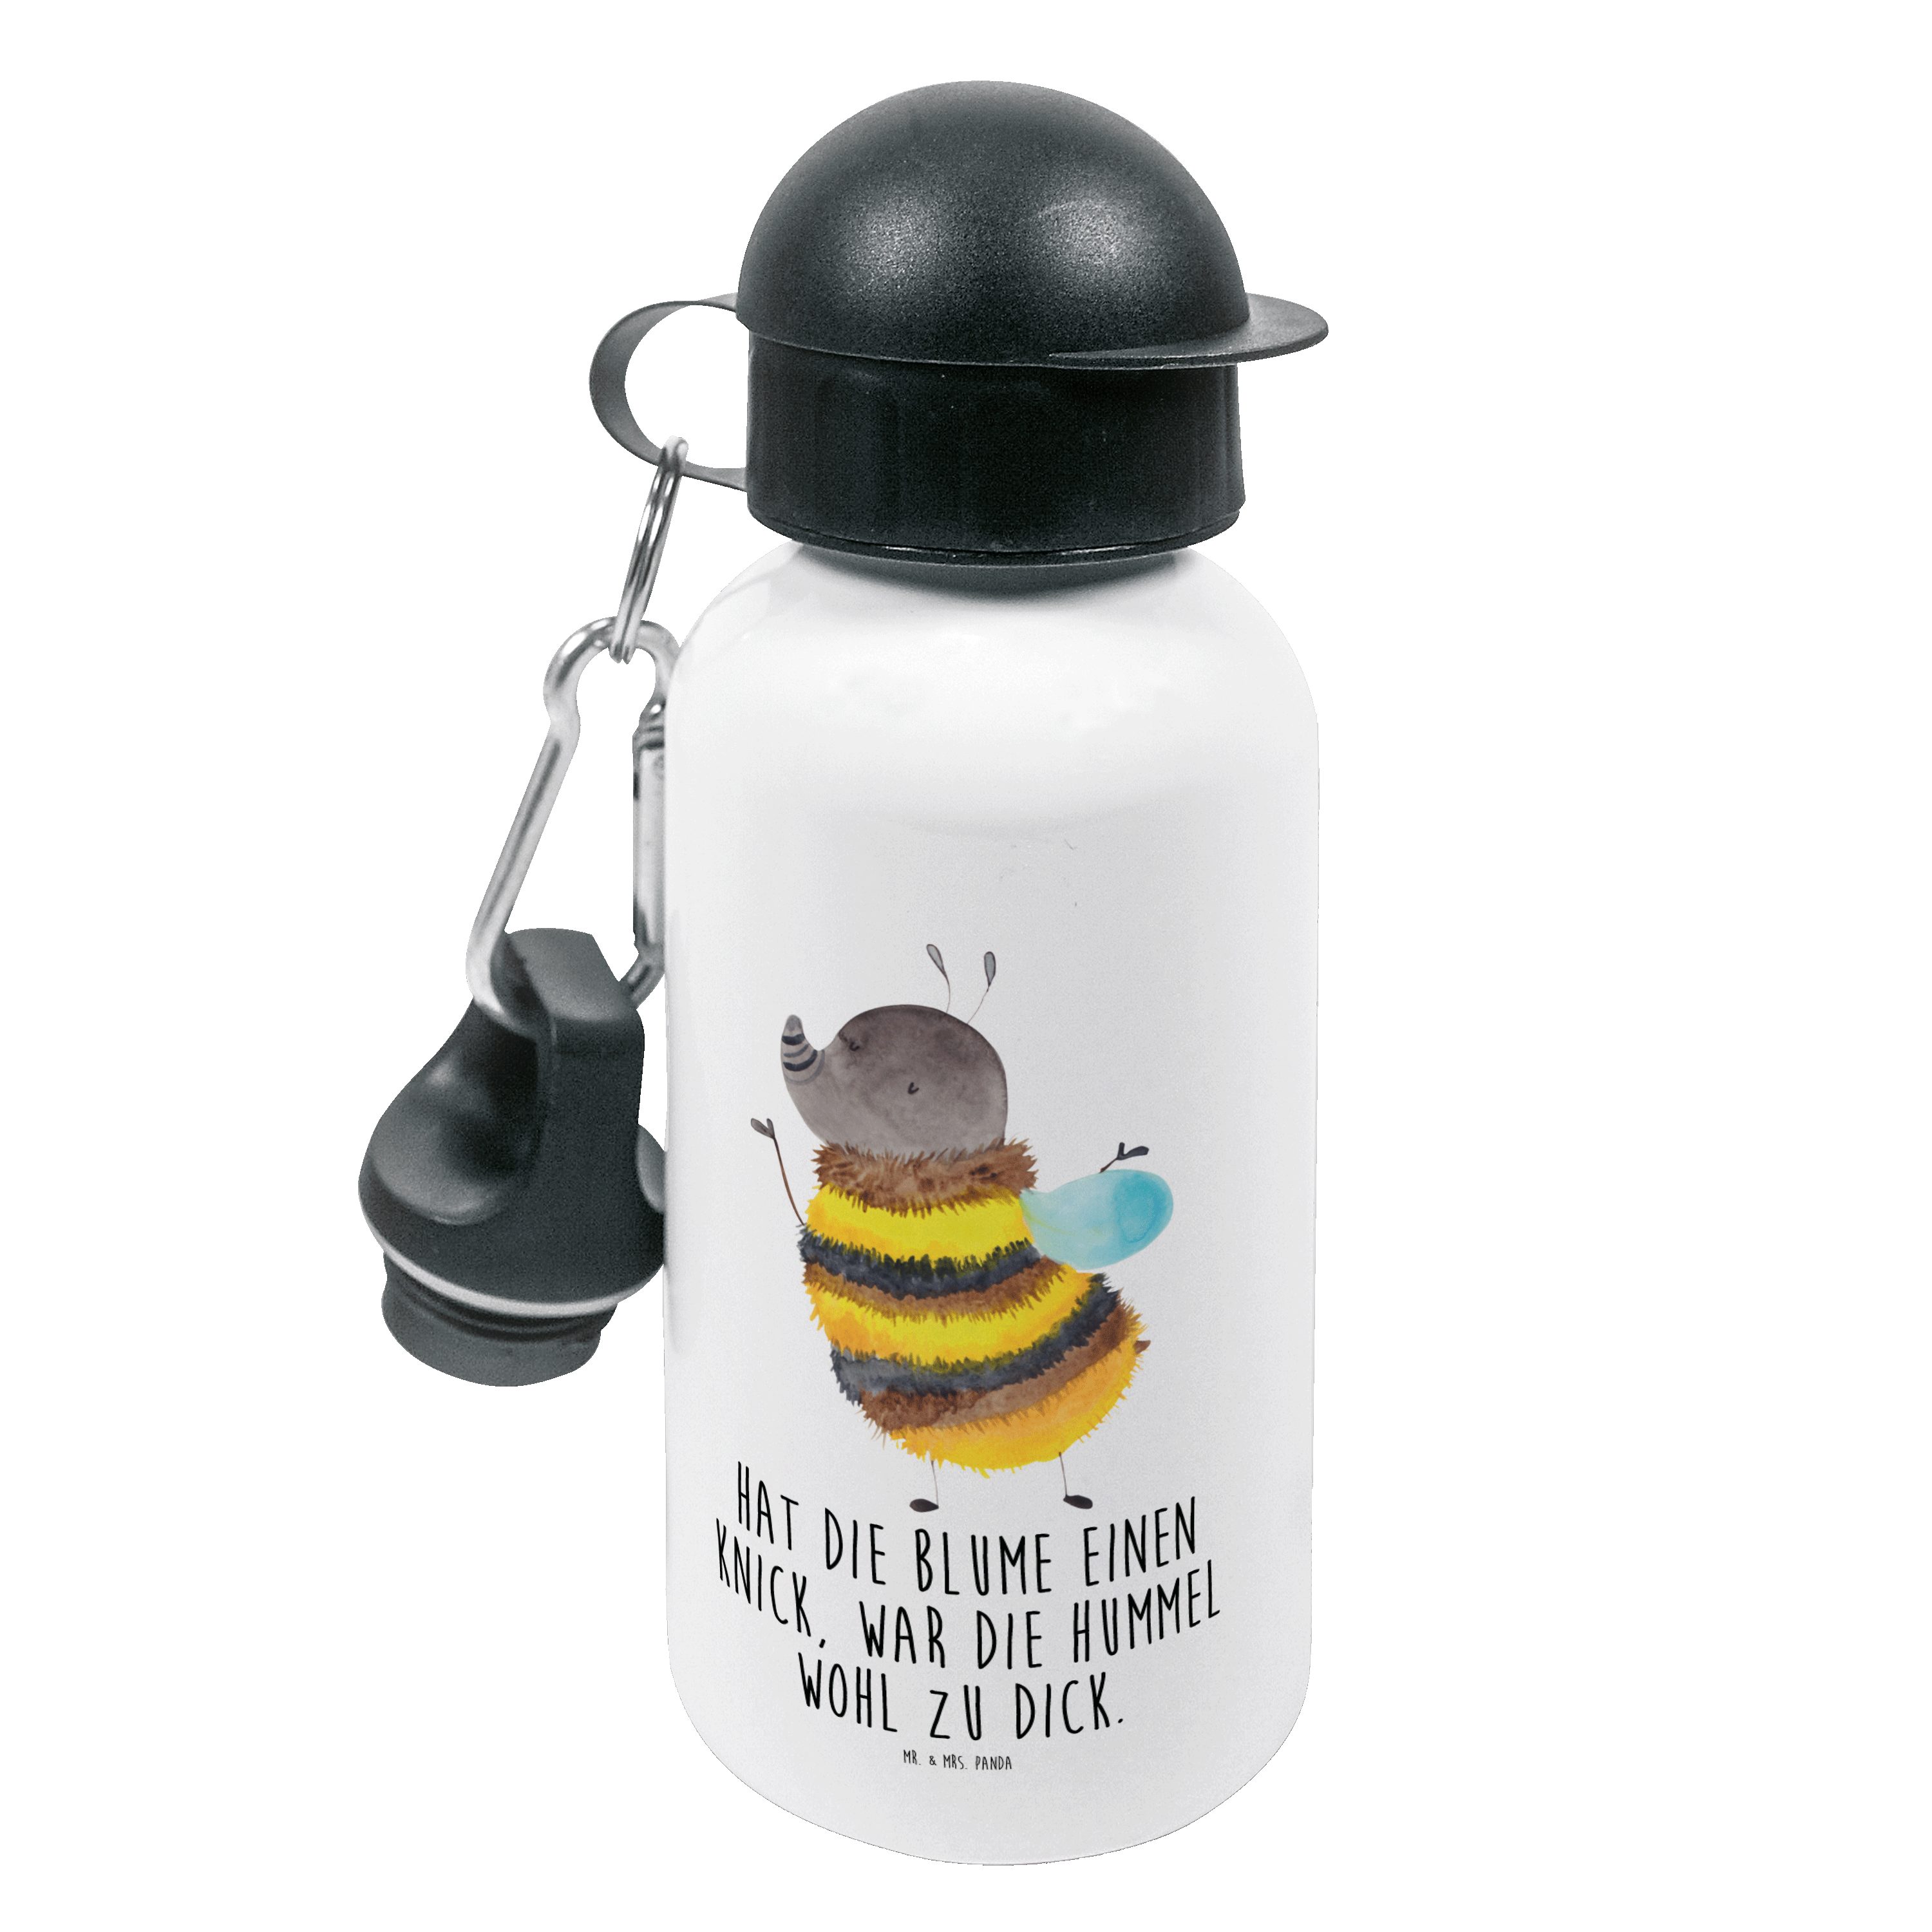 Mr. & Mrs. Panda Trinkflasche Hummel flauschig - Weiß - Geschenk, Kinder, Blume, Gute Laune, Natur